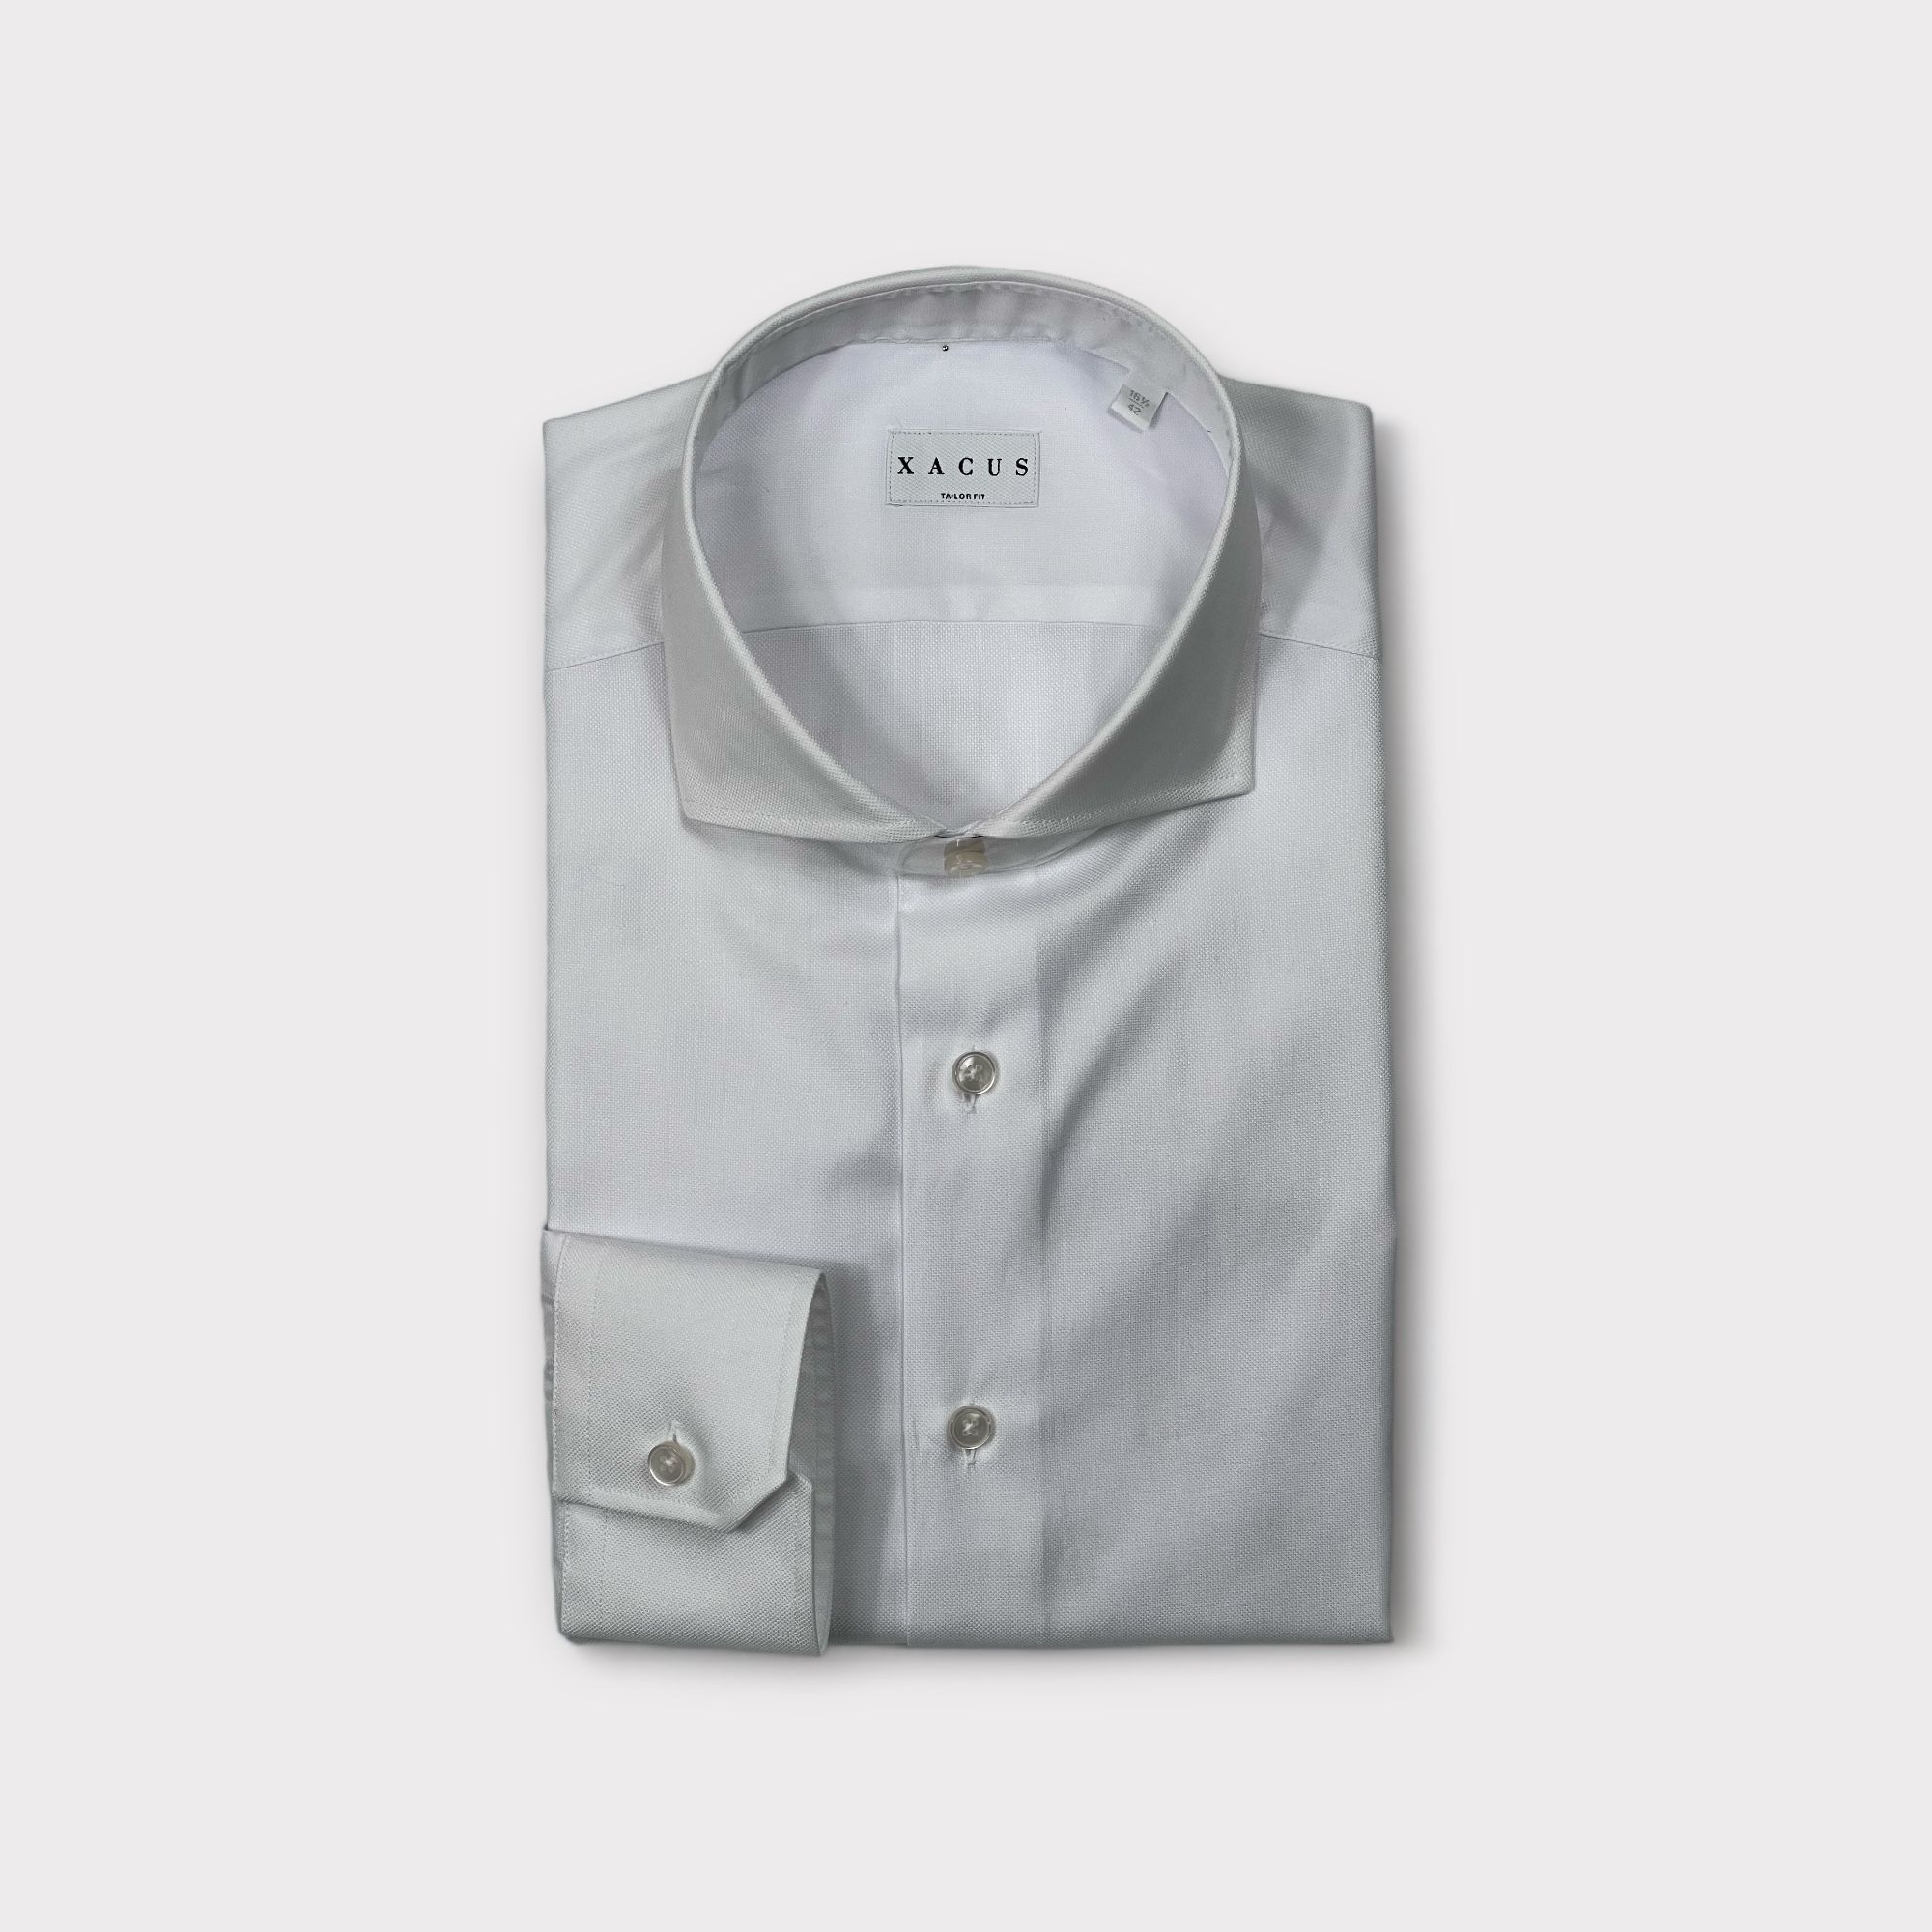 Xacus - Camicia con collo francese in puro cotone royal oxford